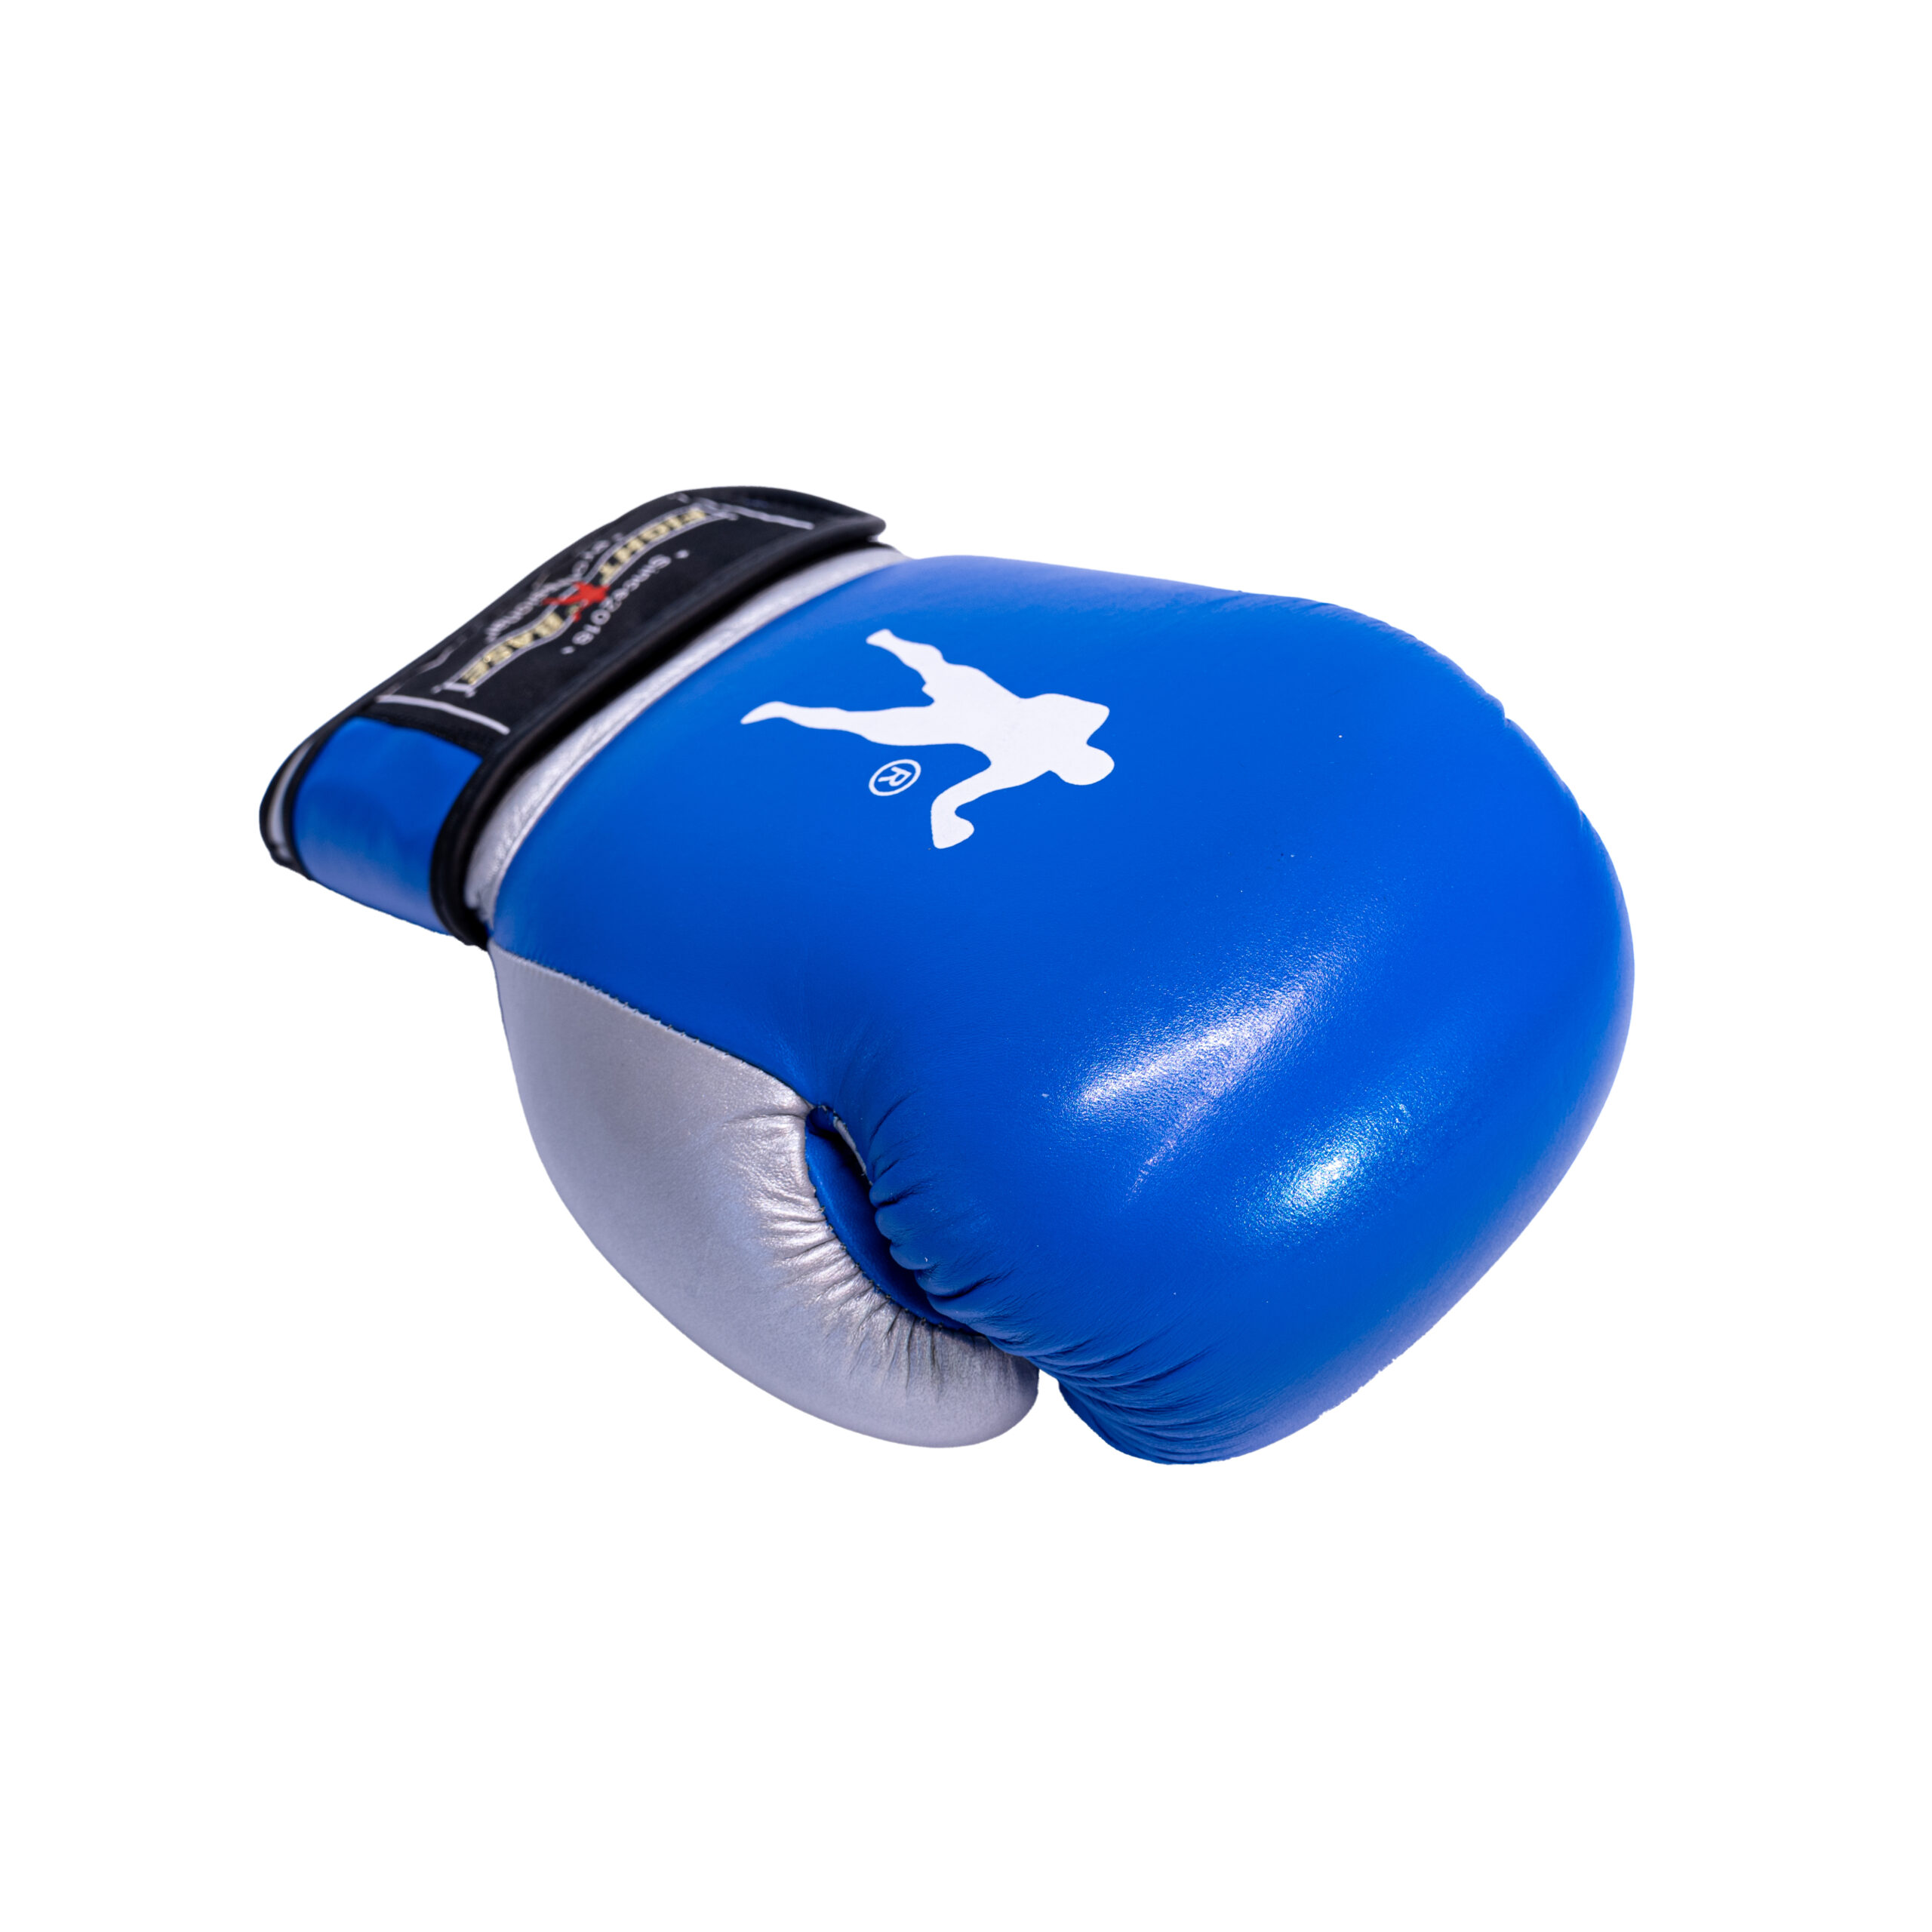 Boxhandschuhe blau kaufen - optimiertes Design l Fight Base